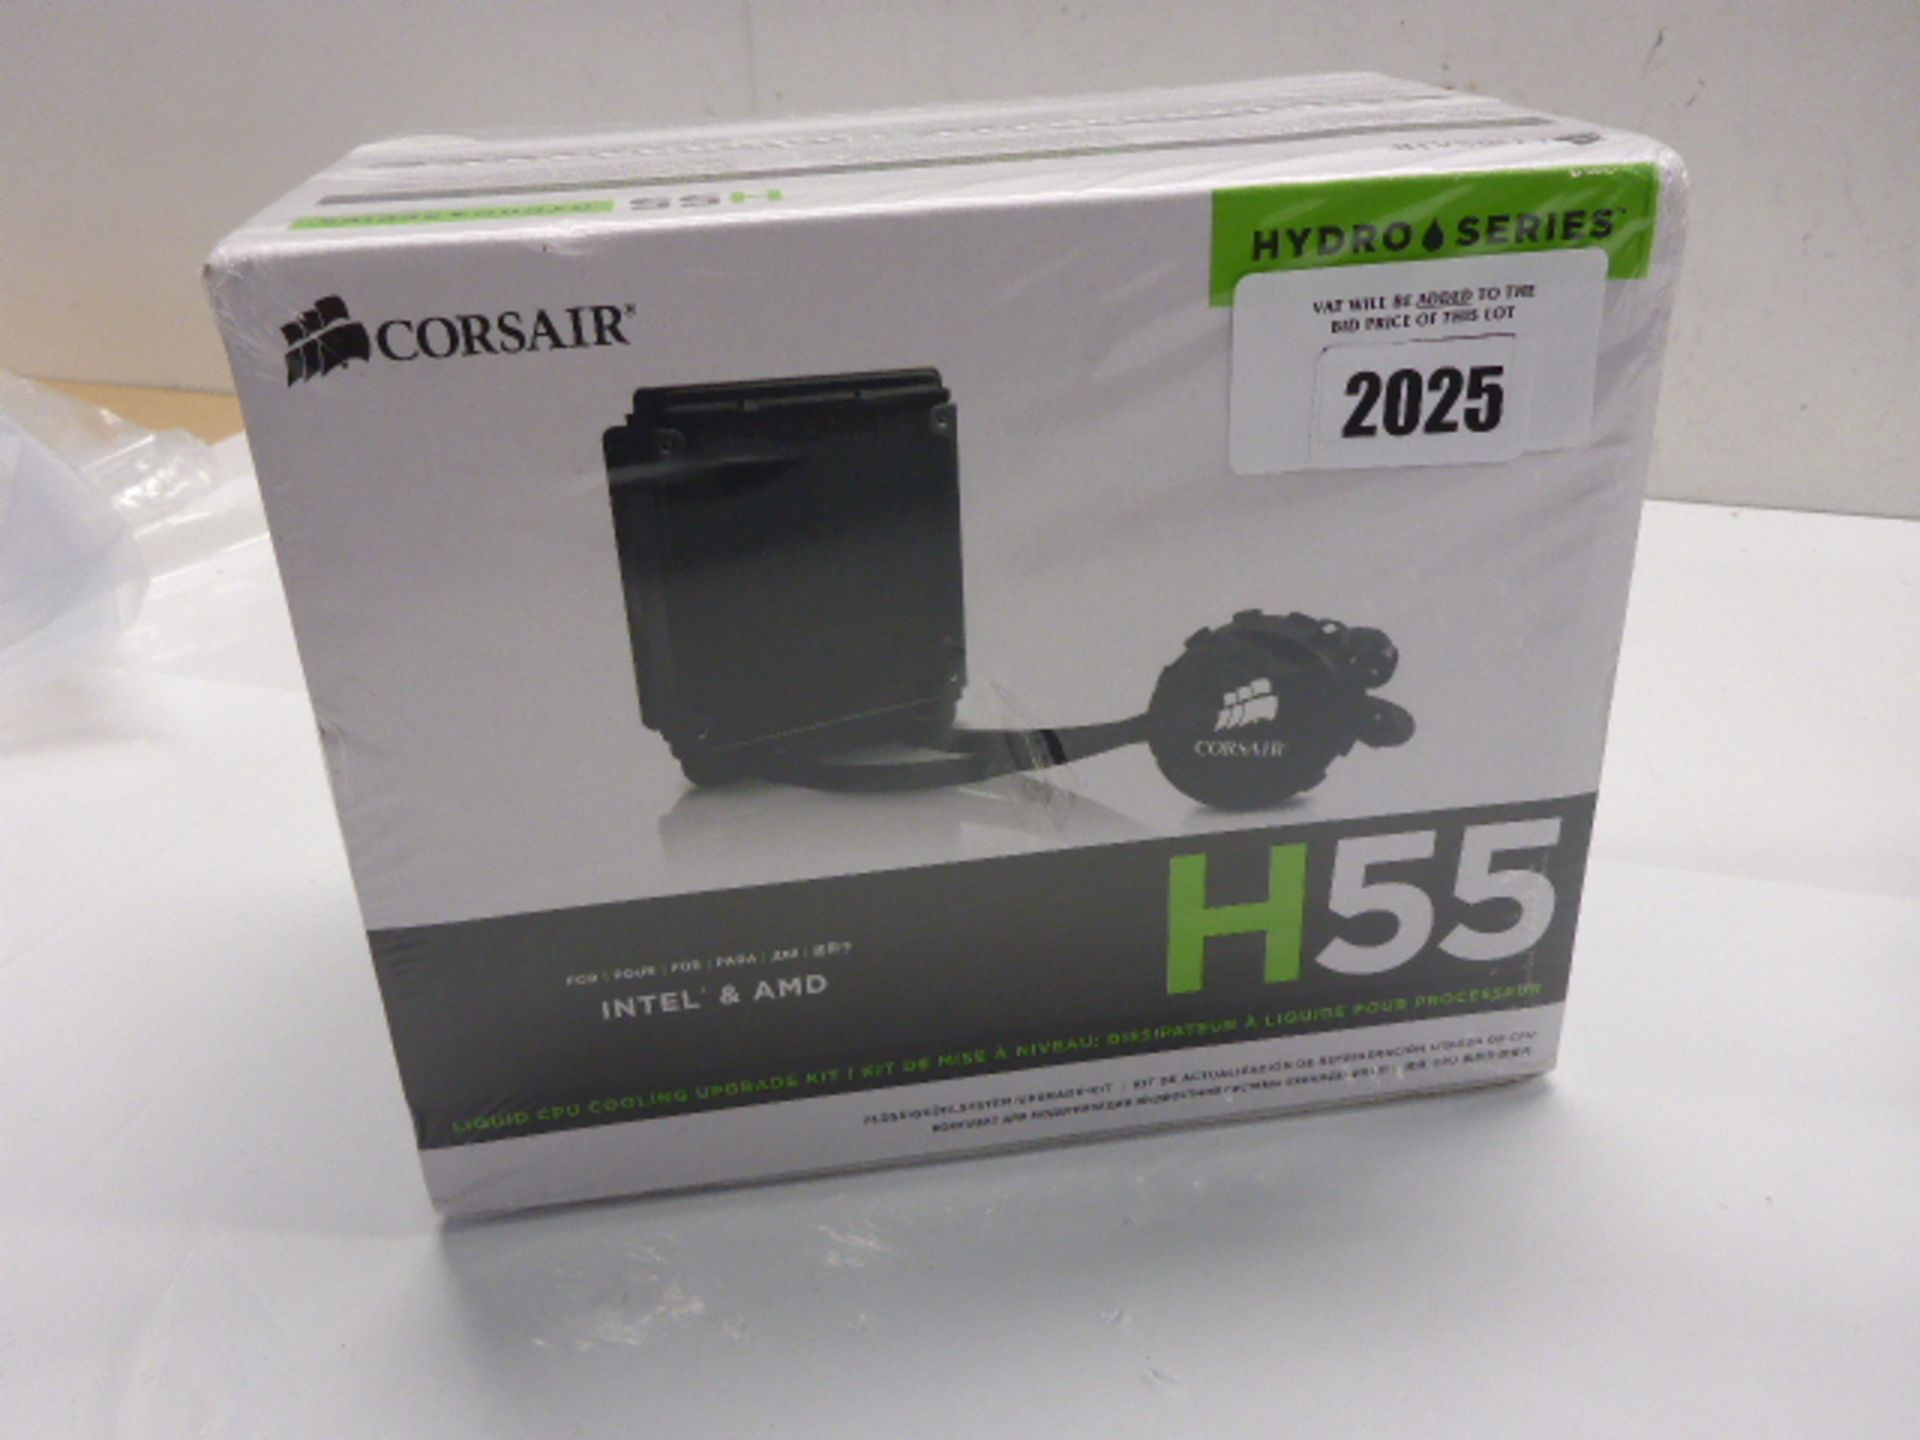 Corsair H55 AMD cpu cooler sealed in box.